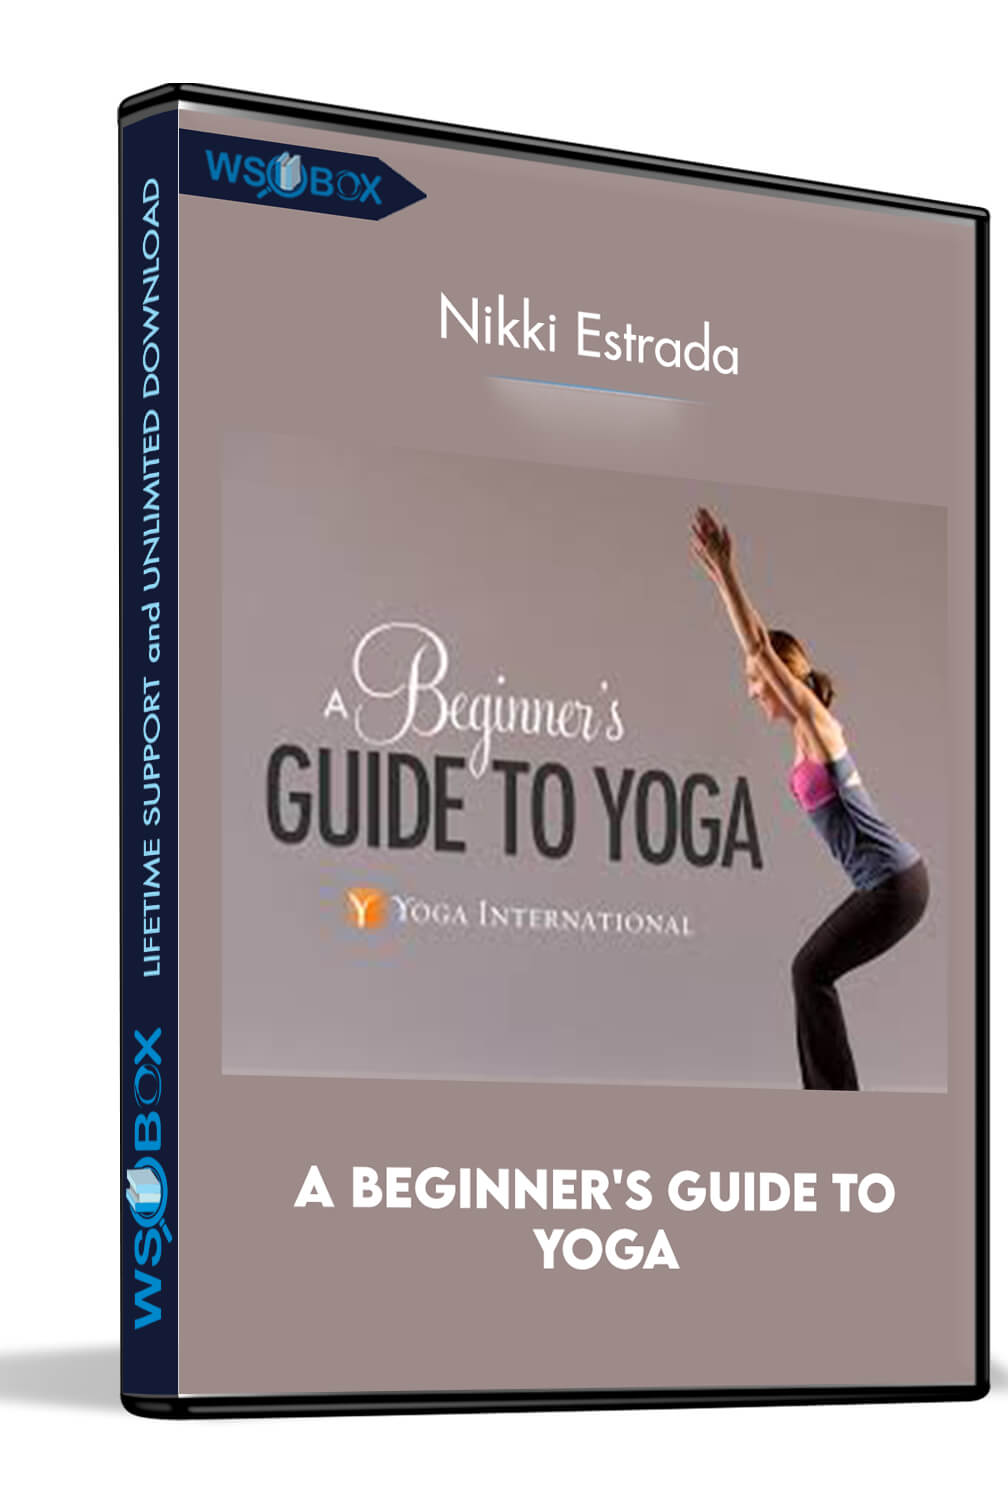 A Beginner's Guide to Yoga - Nikki Estrada